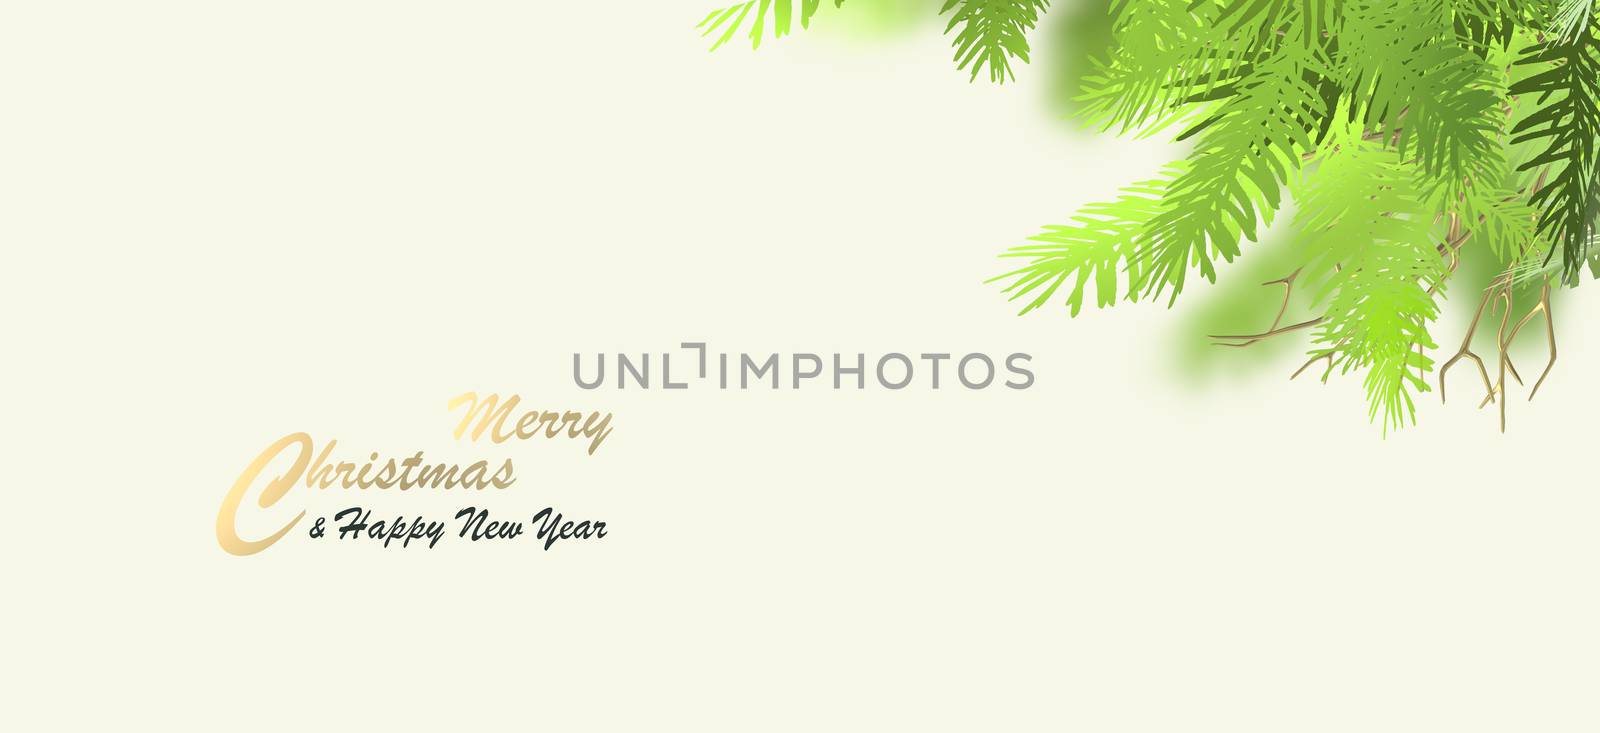 Chrismas holiday background by NelliPolk